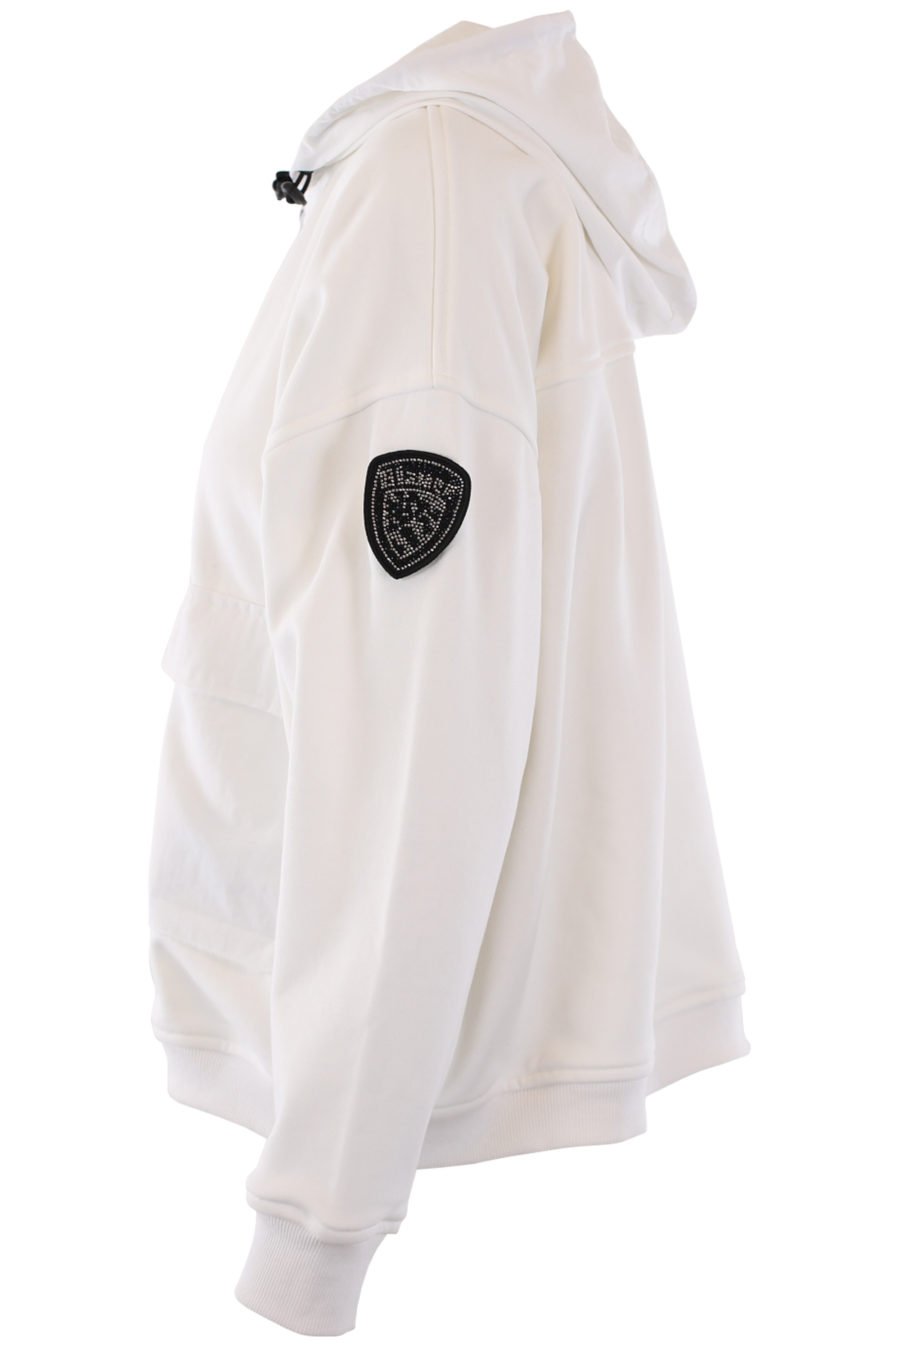 White tracksuit jacket with pockets - IMG 0839